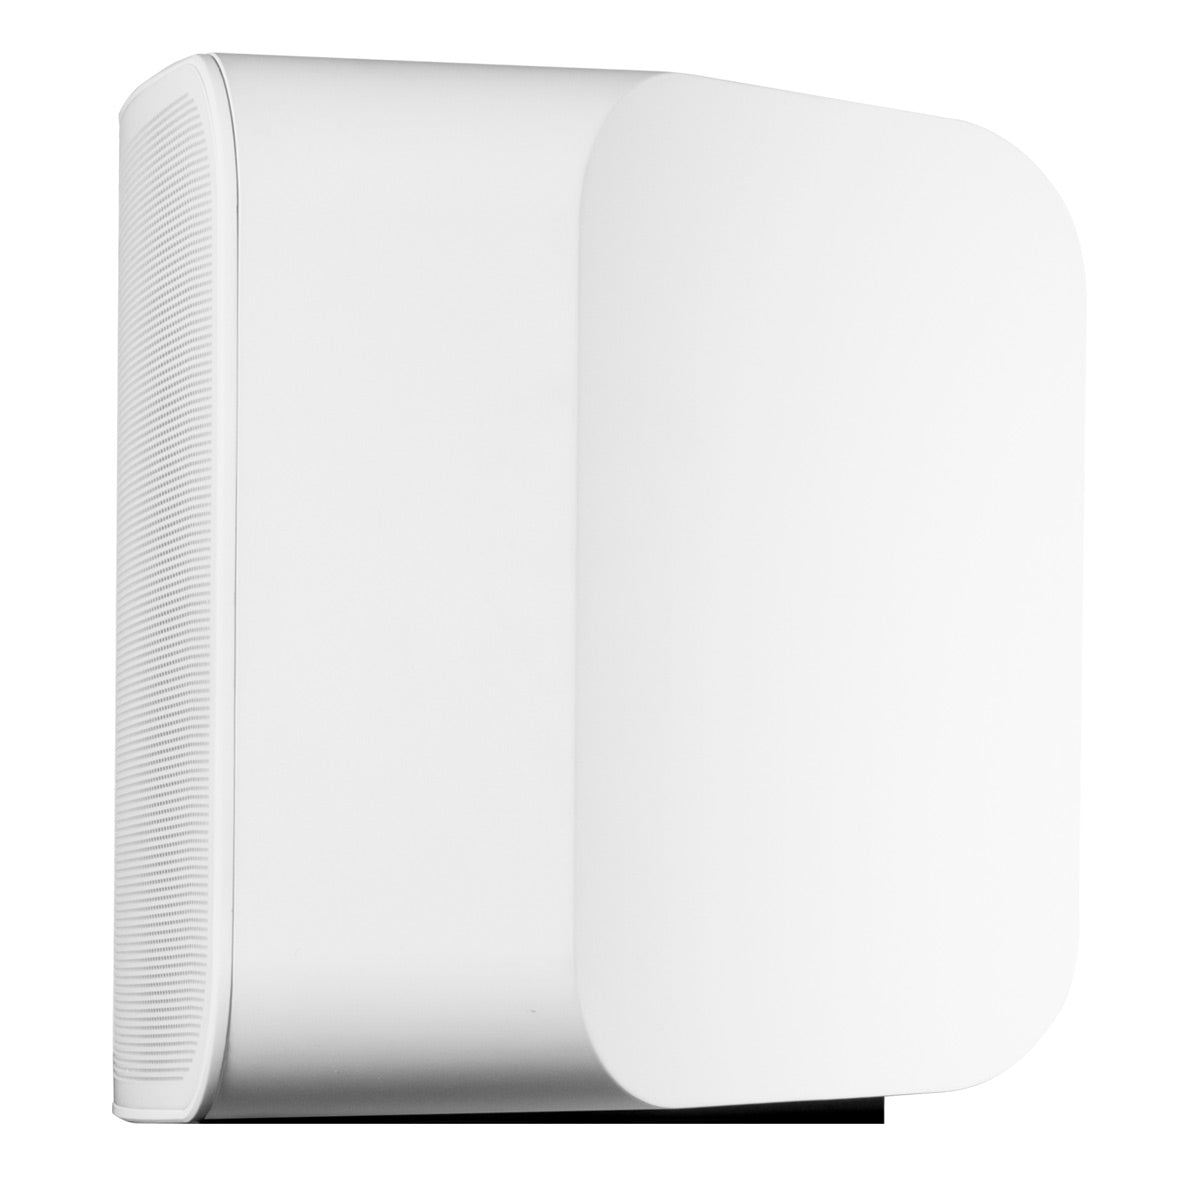 Bluesound PULSE 2i Premium Wireless Streaming Speaker (White)